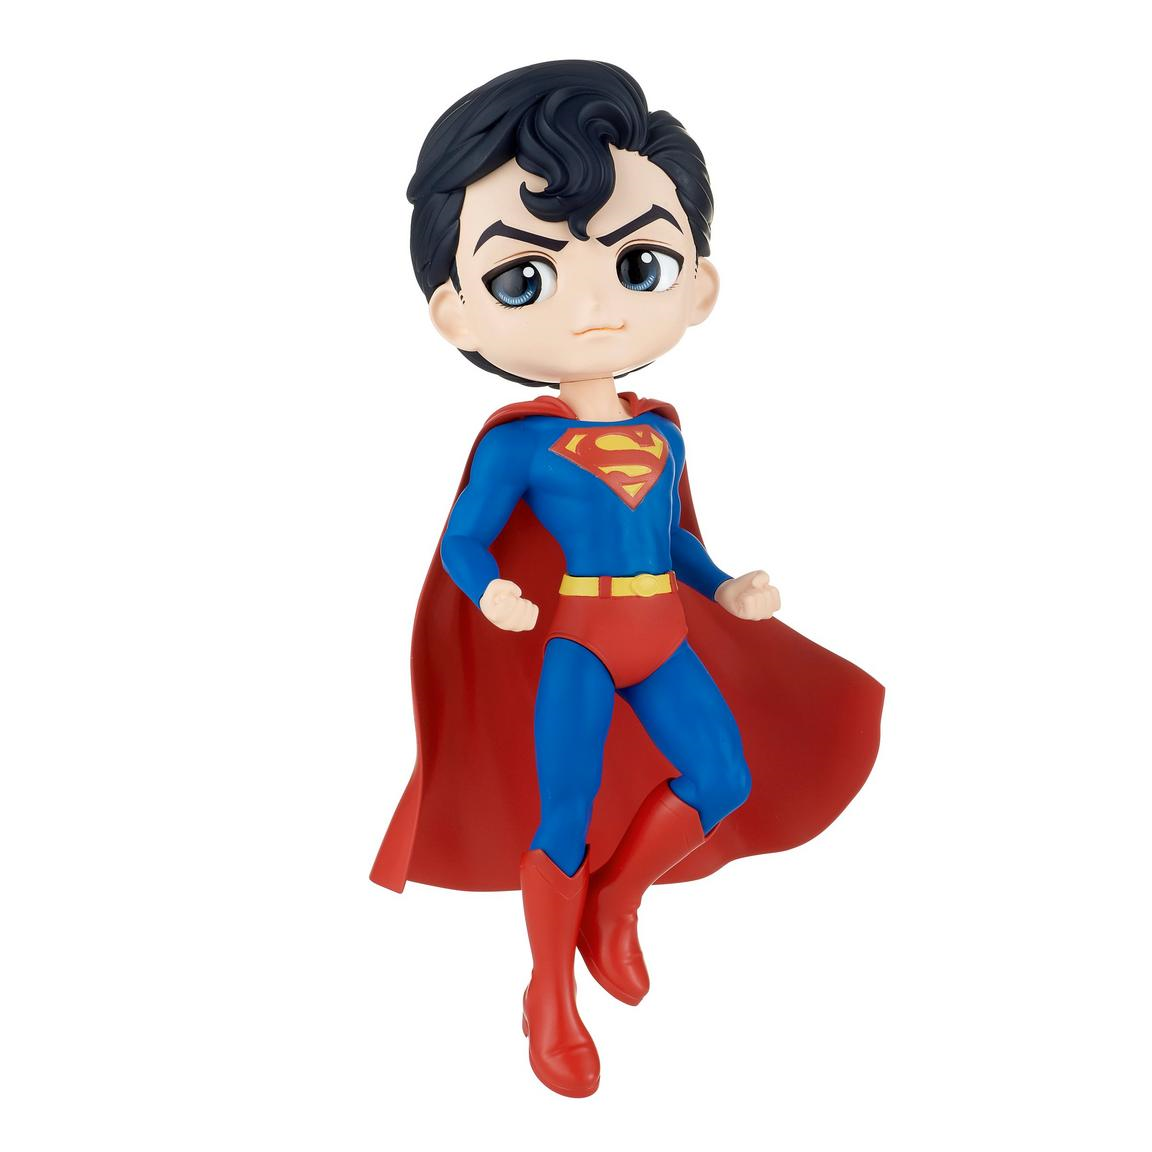 DC Comics Superman (Version B) Q Posket Statue - $32.88